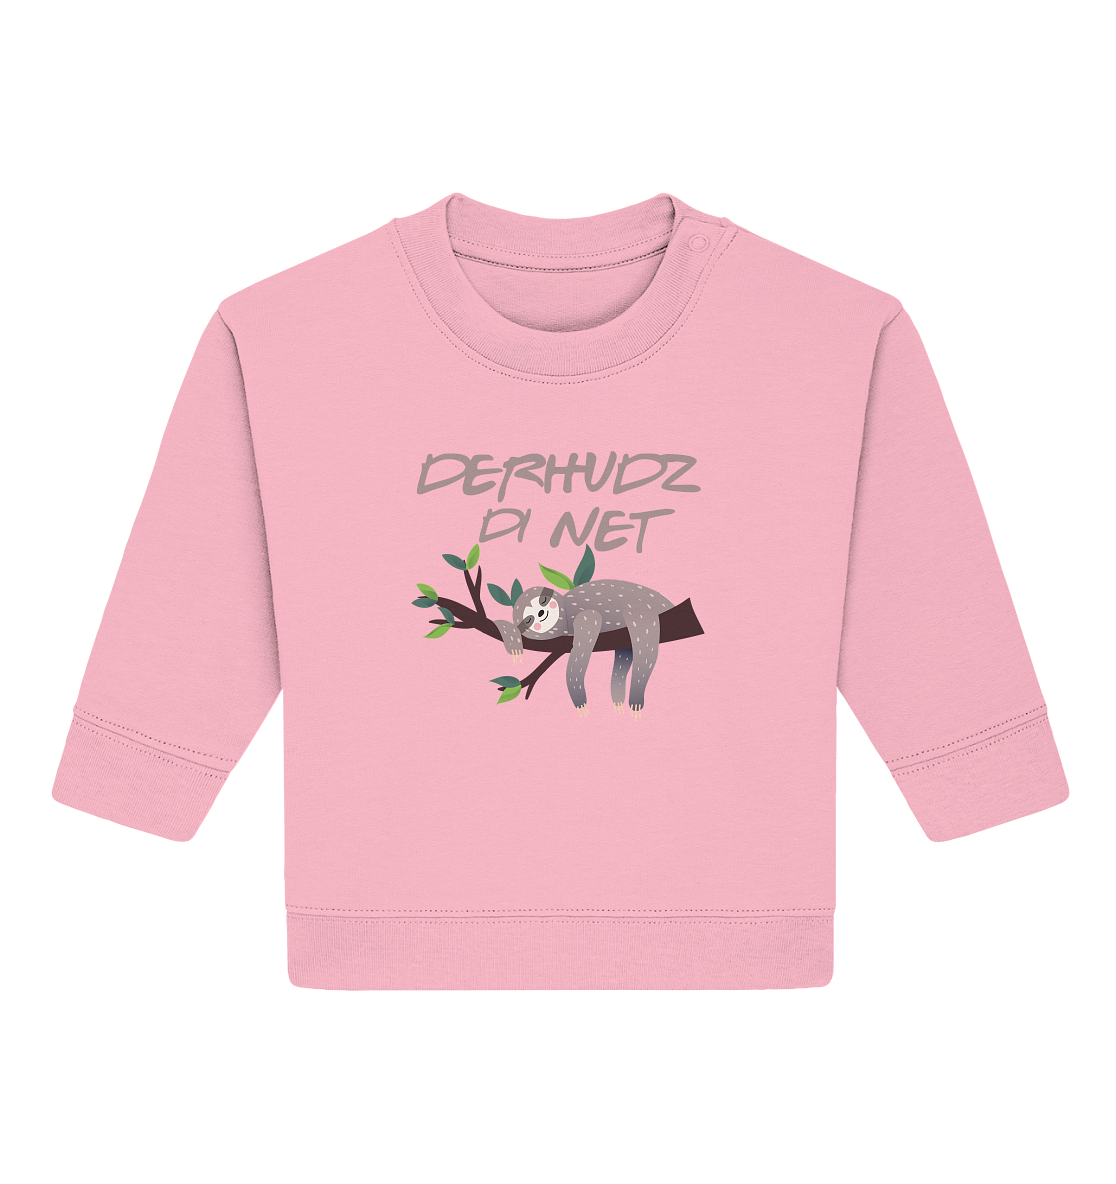 #BABY - DERHUDZ DI NET - Baby Organic Sweatshirt